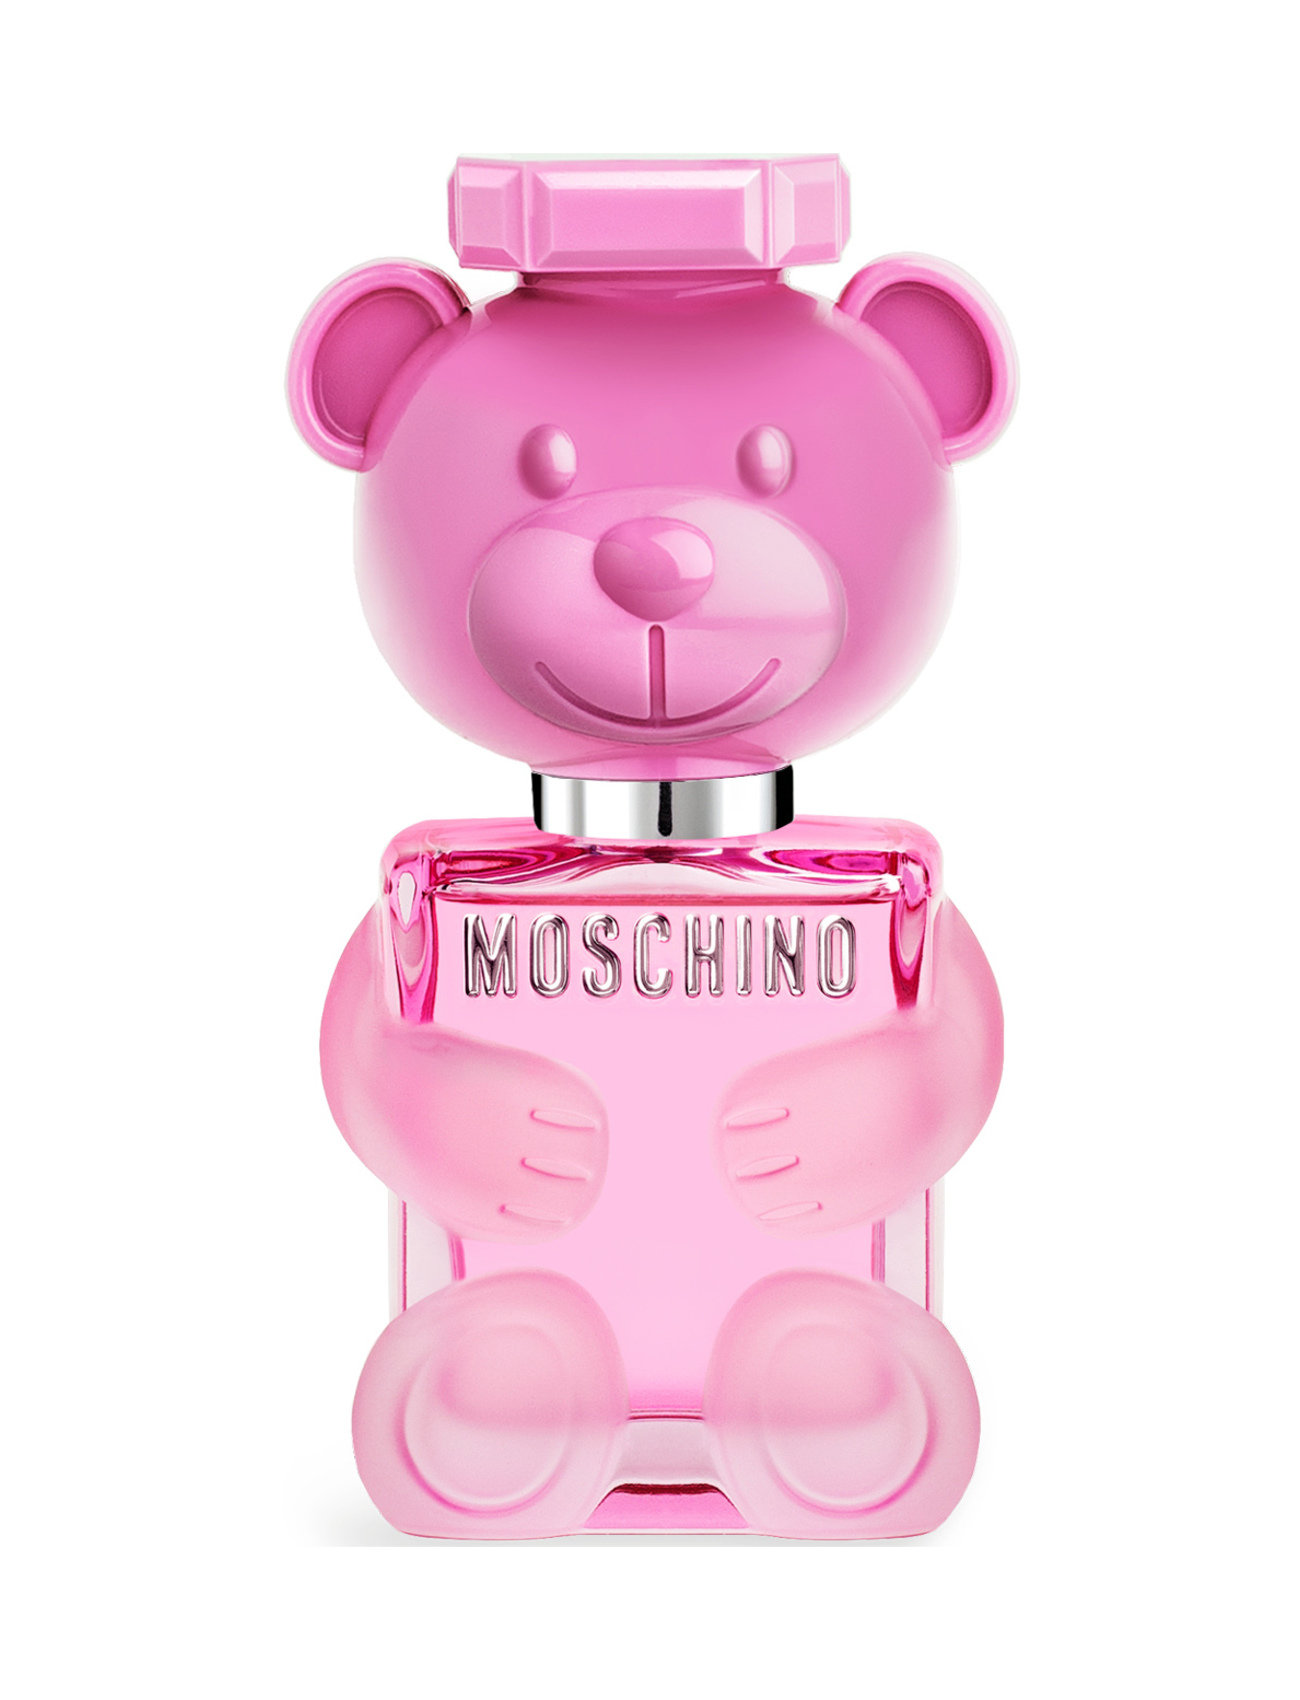 Moschino Toy 2 Bubblegum Edt 50 Ml Parfym Eau De Toilette Nude Moschino